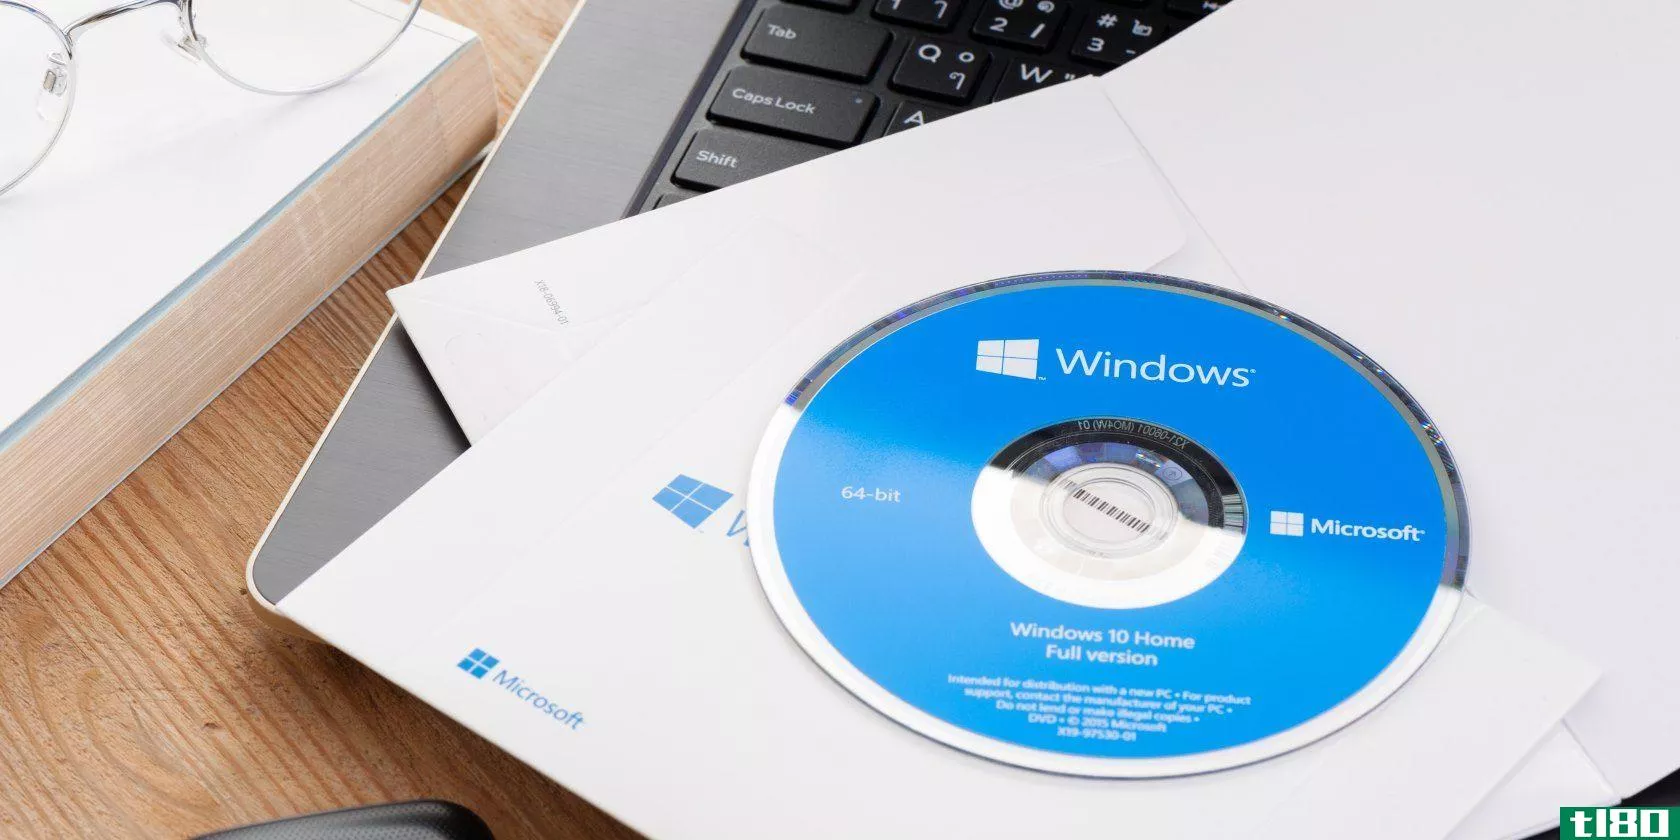 A Windows 10 setup disk